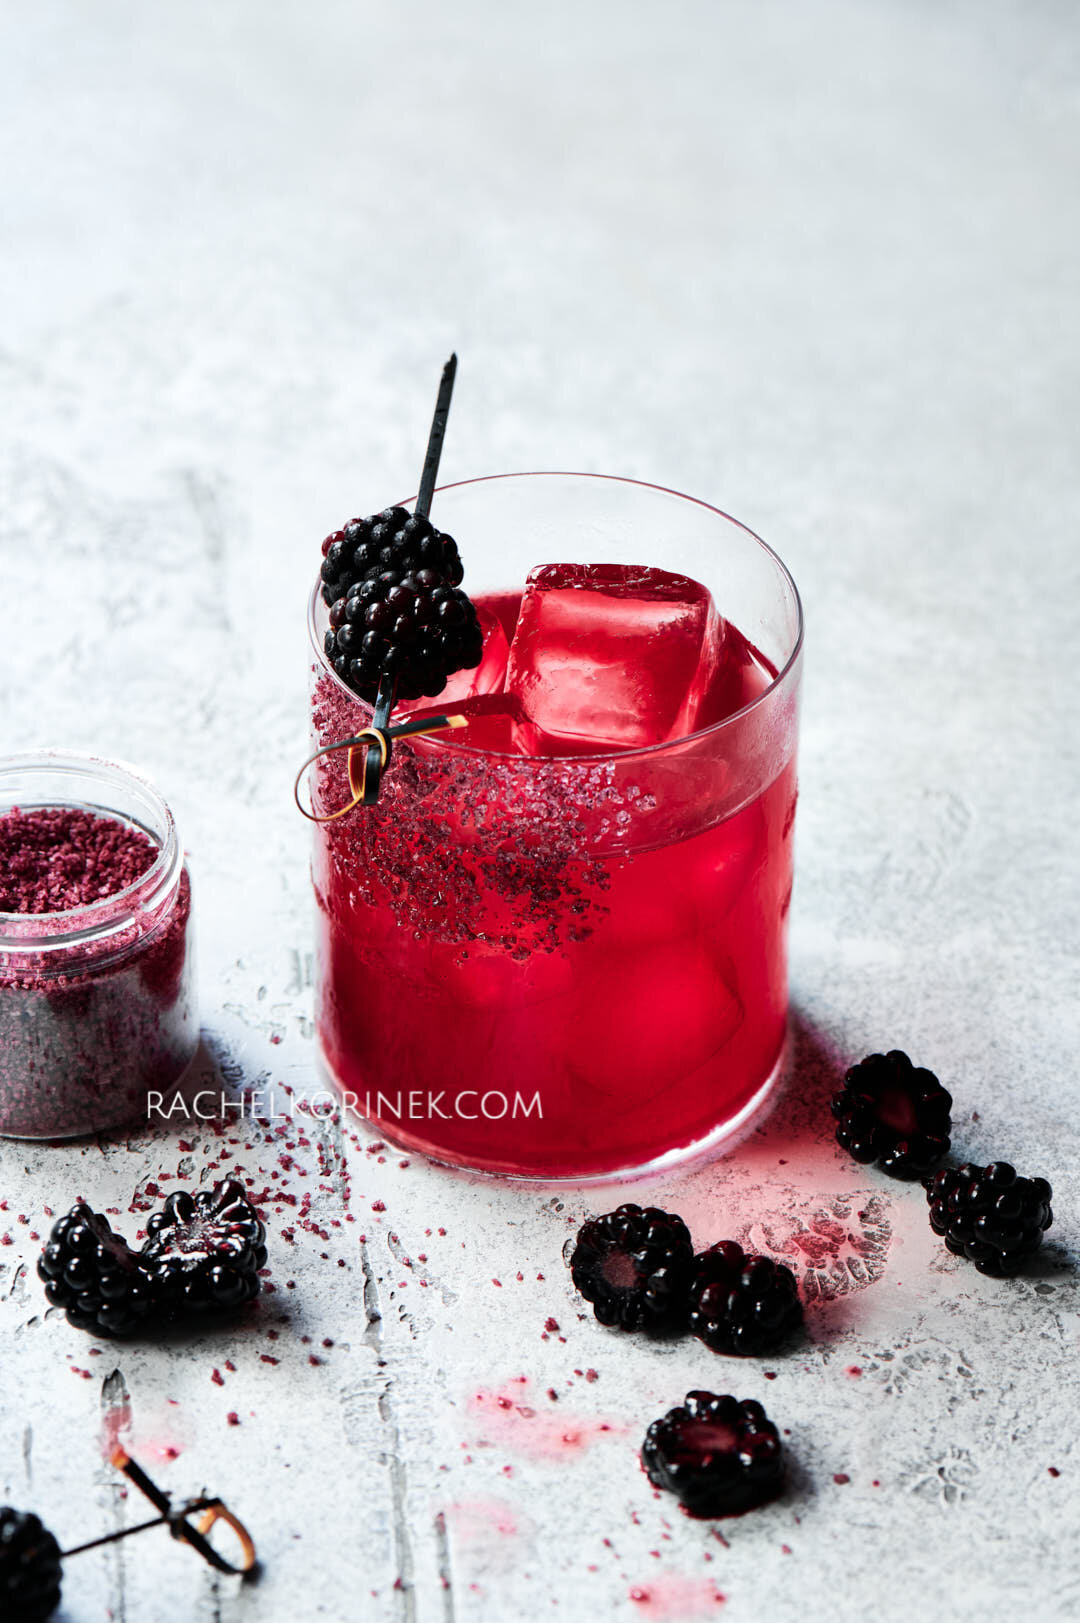 Rachel Korinek Cocktails_Blackberry Margarita_August 2021_33599 RK Blog.jpg